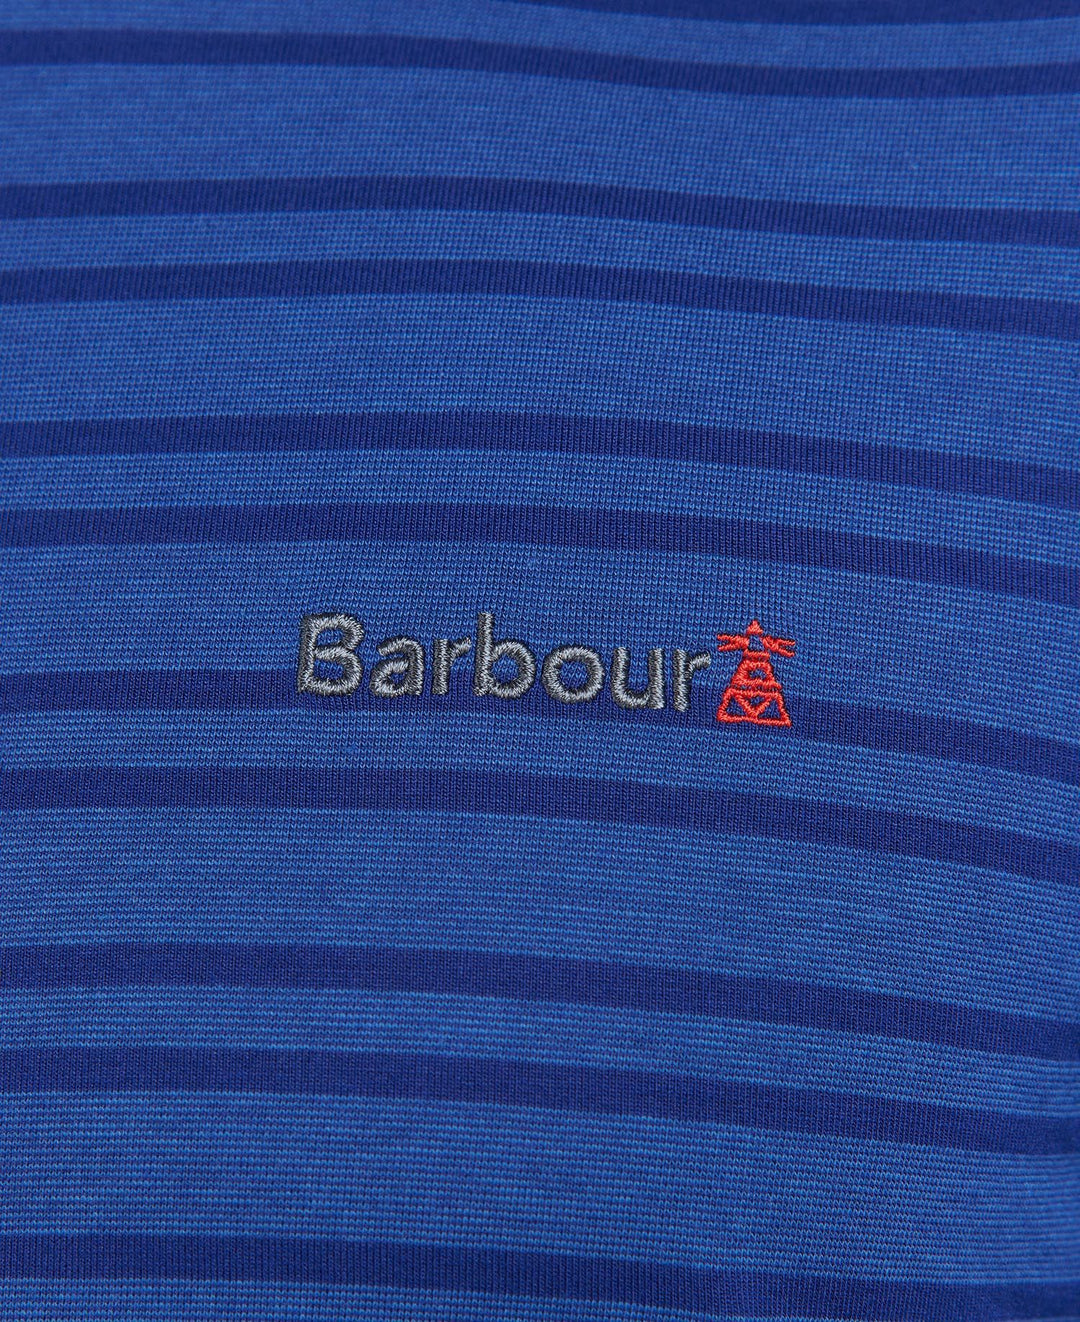 Barbour Stainton Stripe Tee/Majica MTS1112